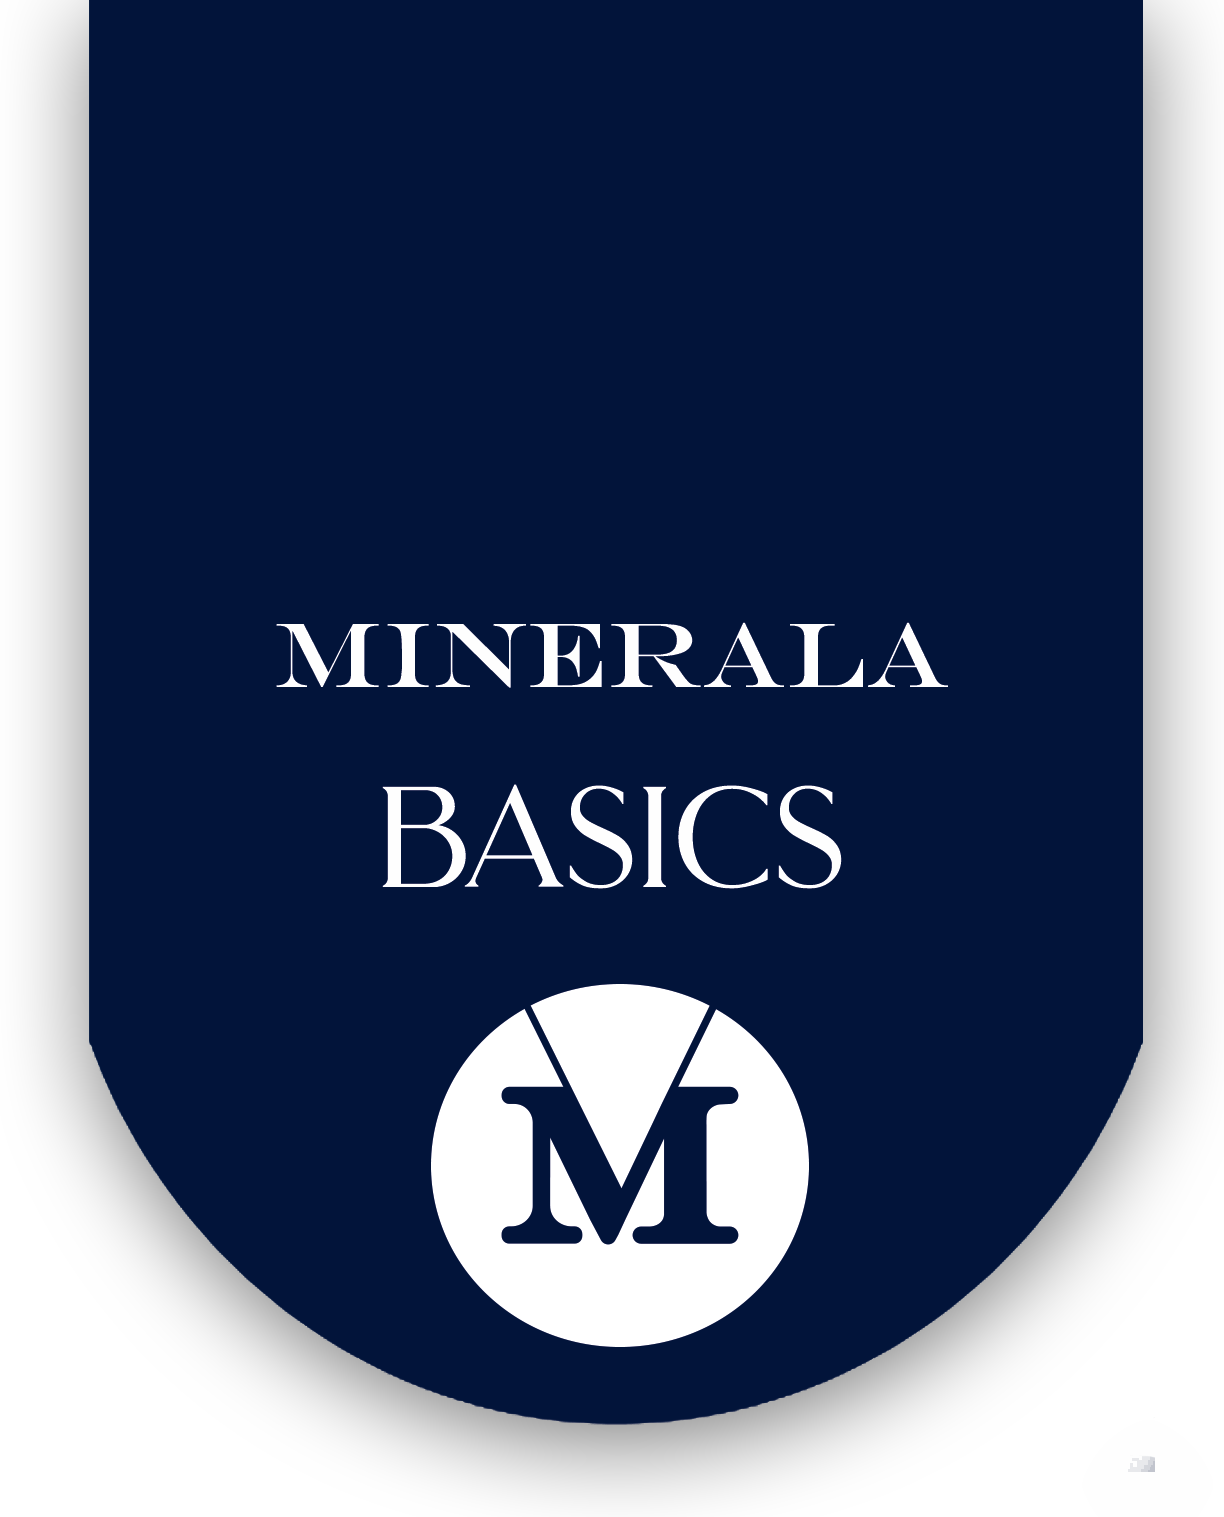 Minerala-Basics met schaduw achtergrond-bakingsoda nl Nistelrode